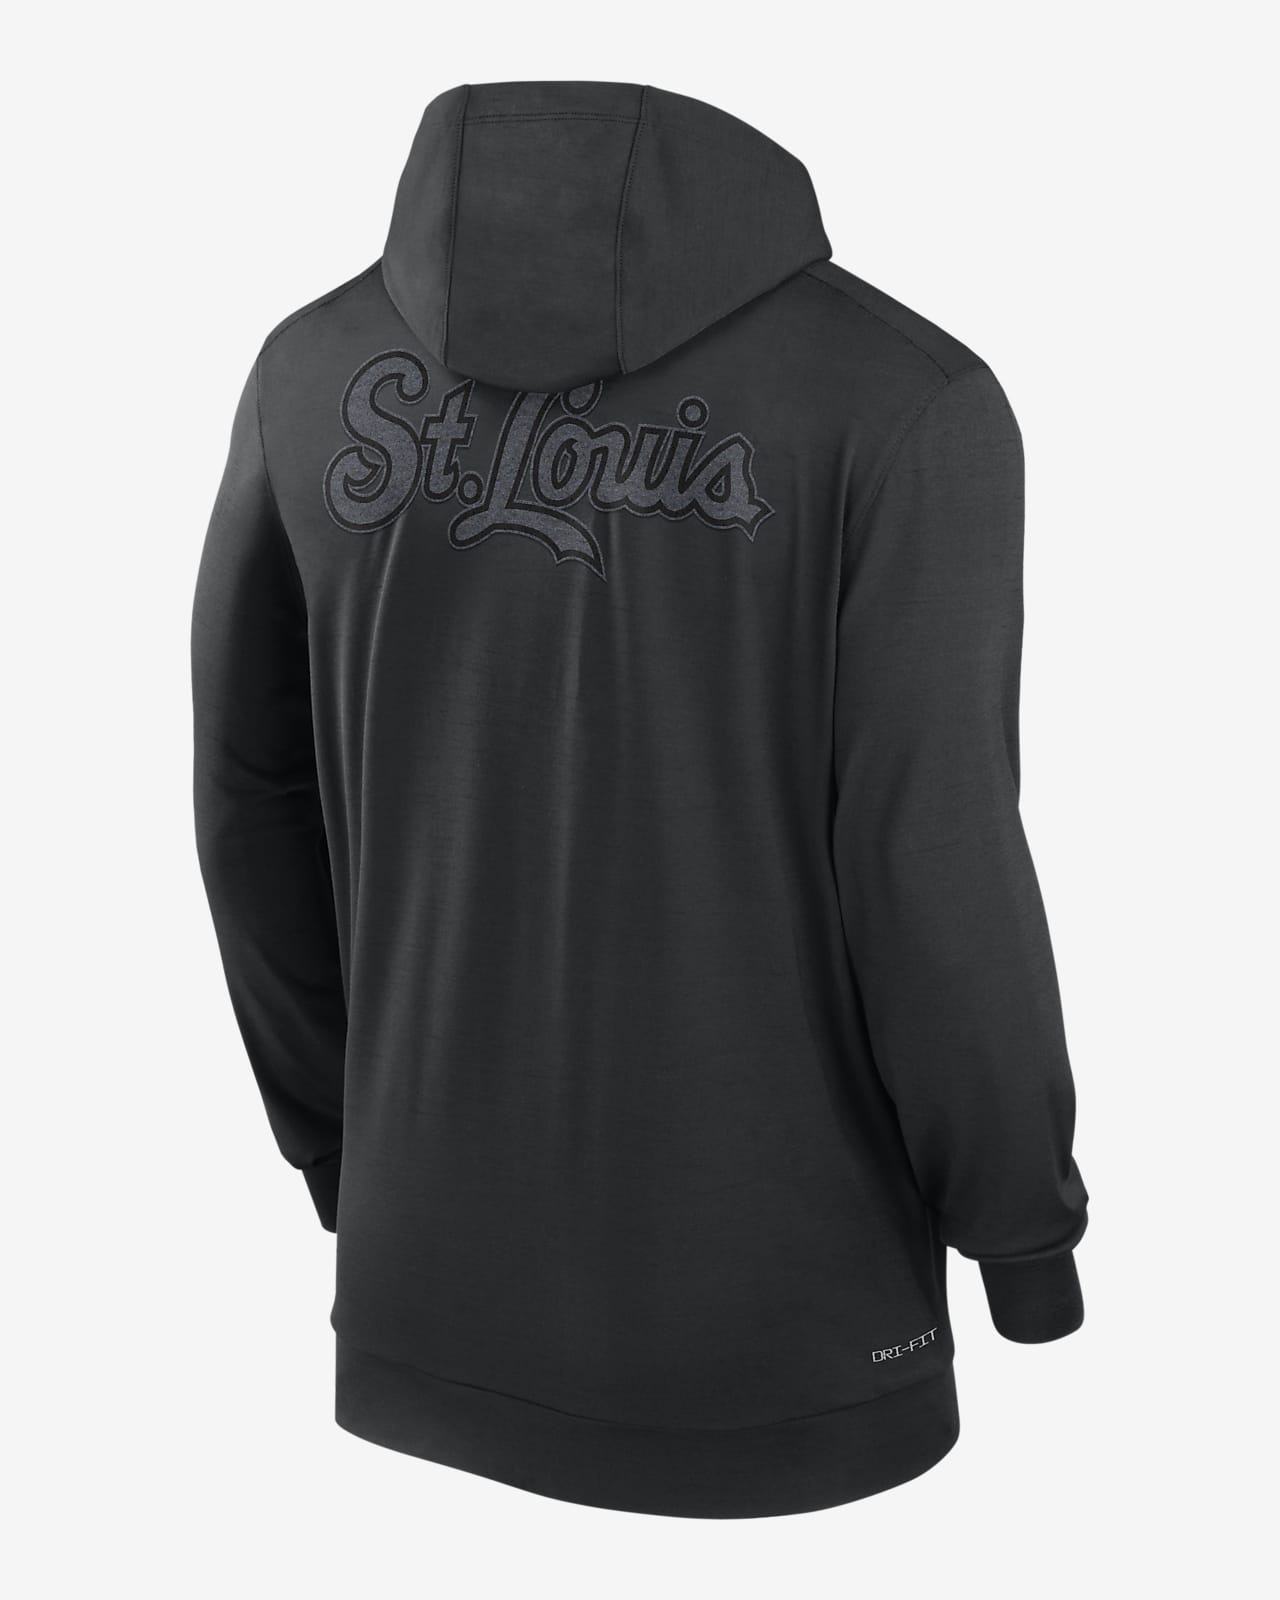 St. Louis Cardinals Full-Zip Jacket, Pullover Jacket, Cardinals